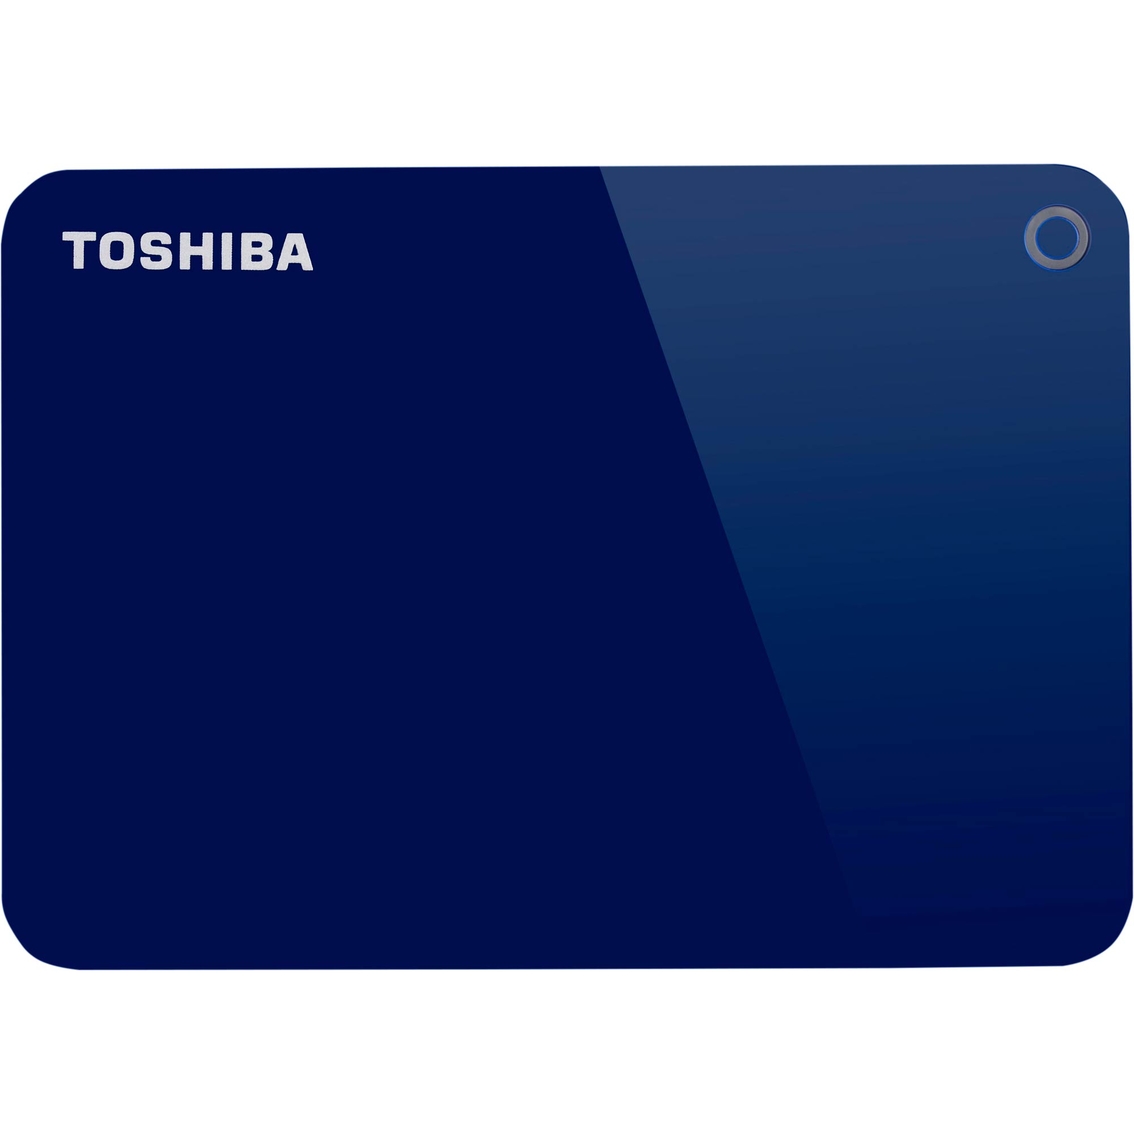 Toshiba 1TB Canvio Advance External Hard Drive - Image 2 of 3